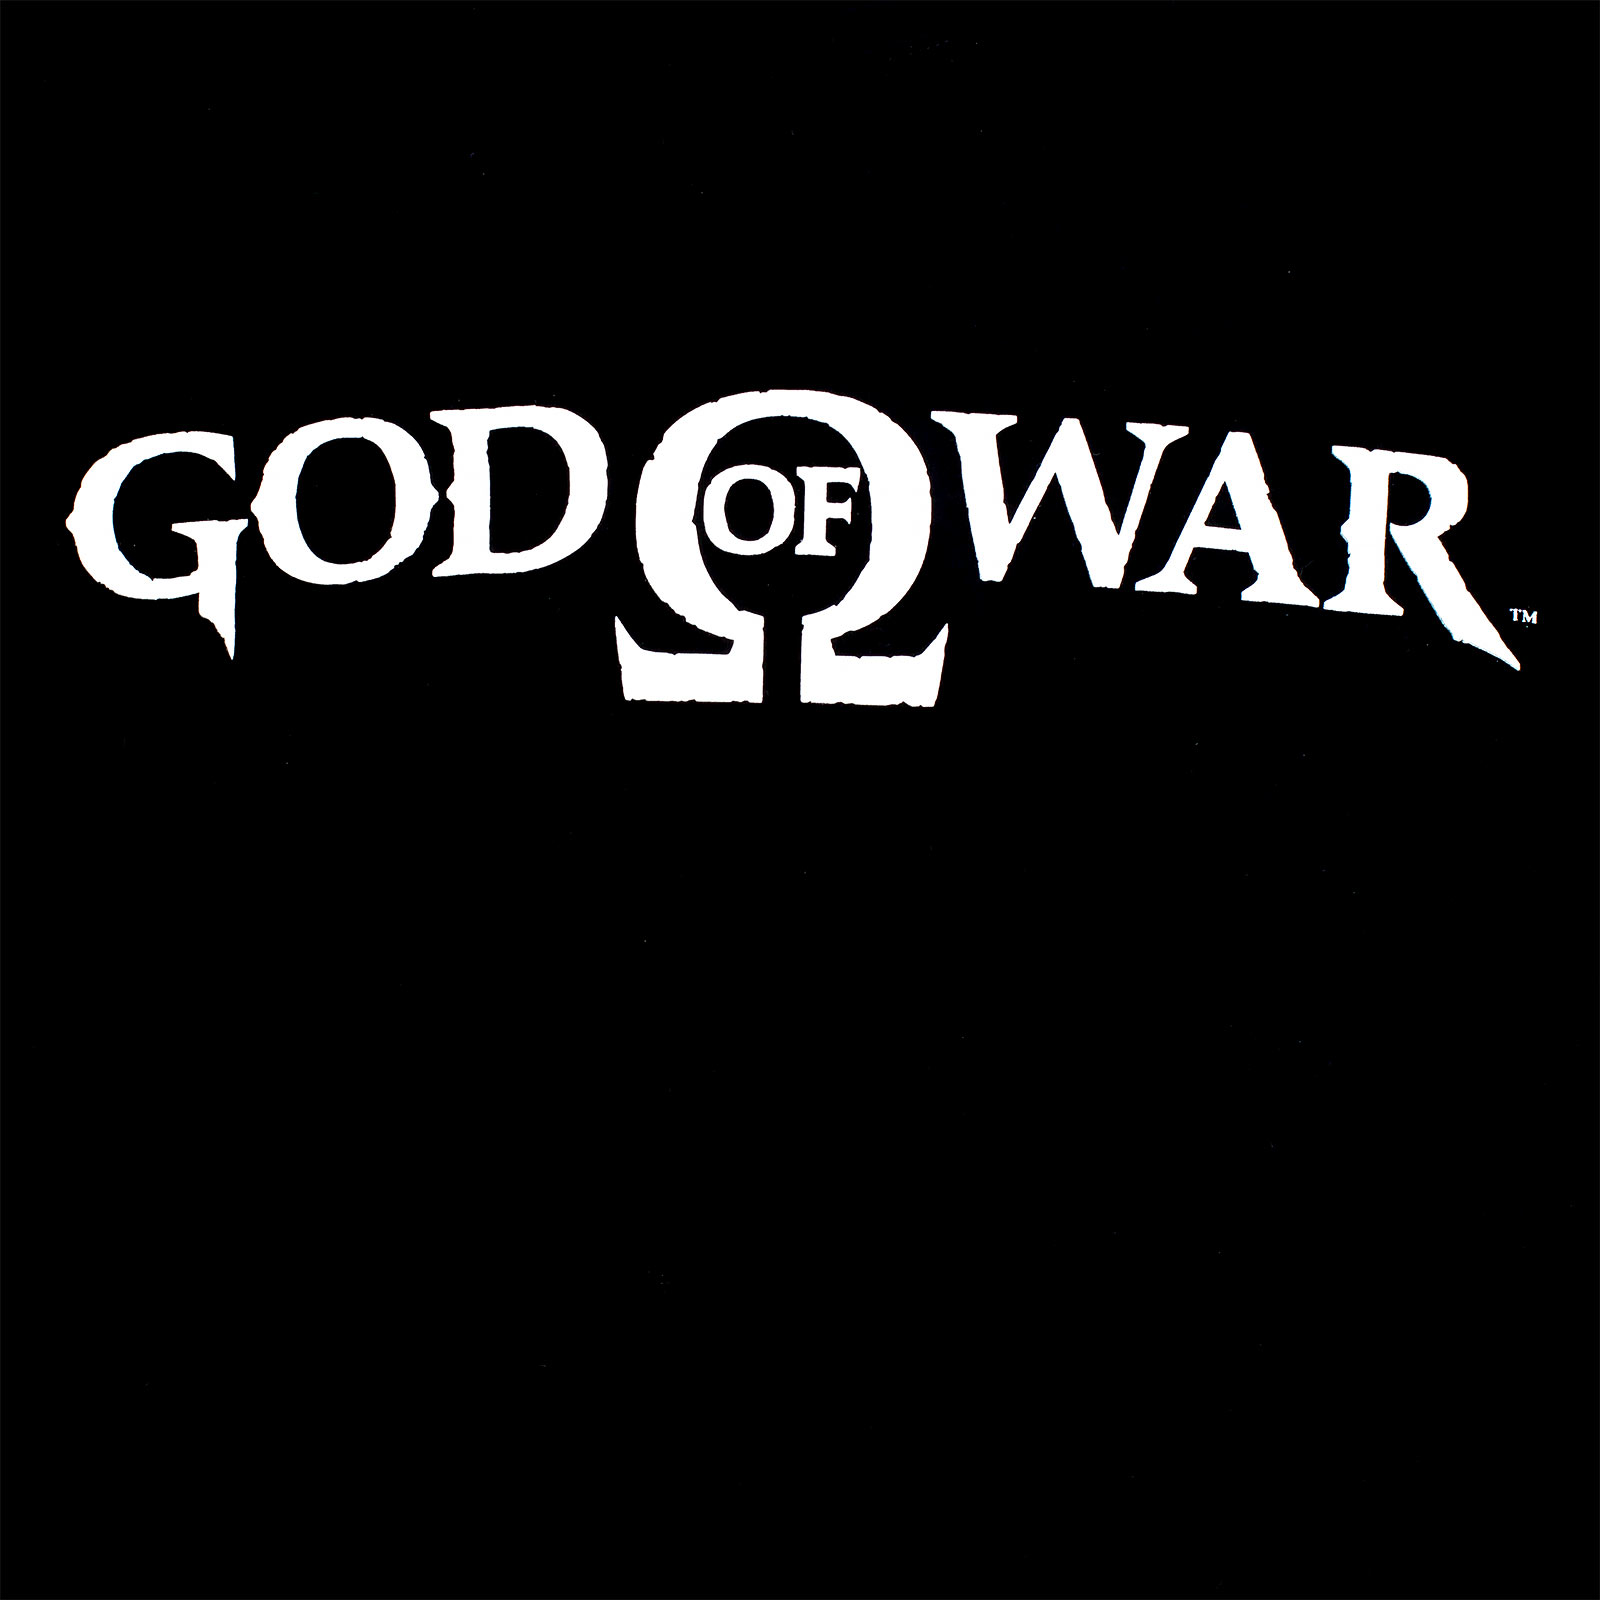 God of War - Logo T-Shirt Black